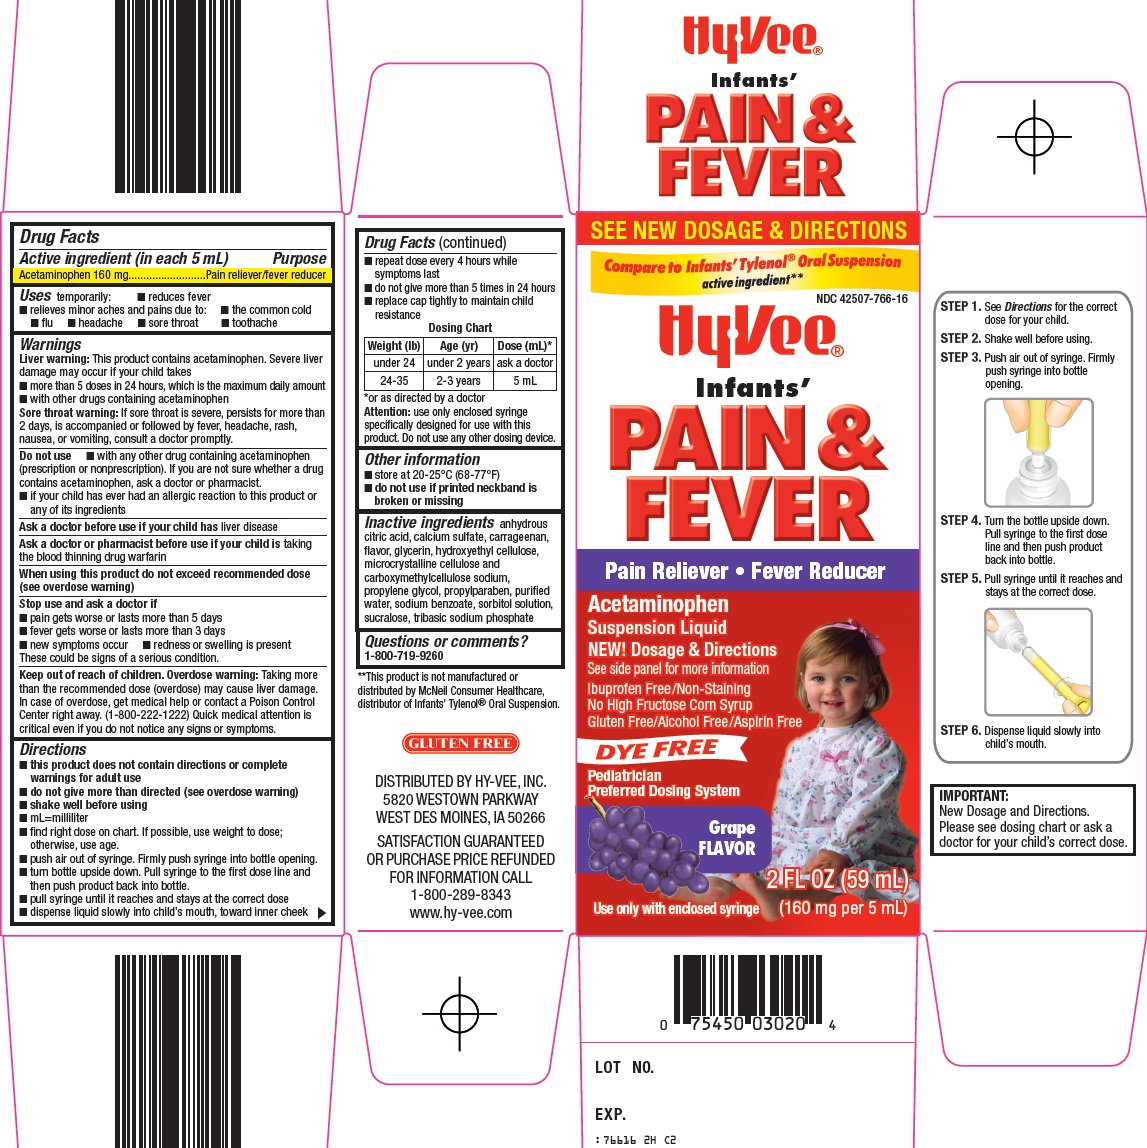 Hy-Vee, Inc. Infants’ Pain & Fever